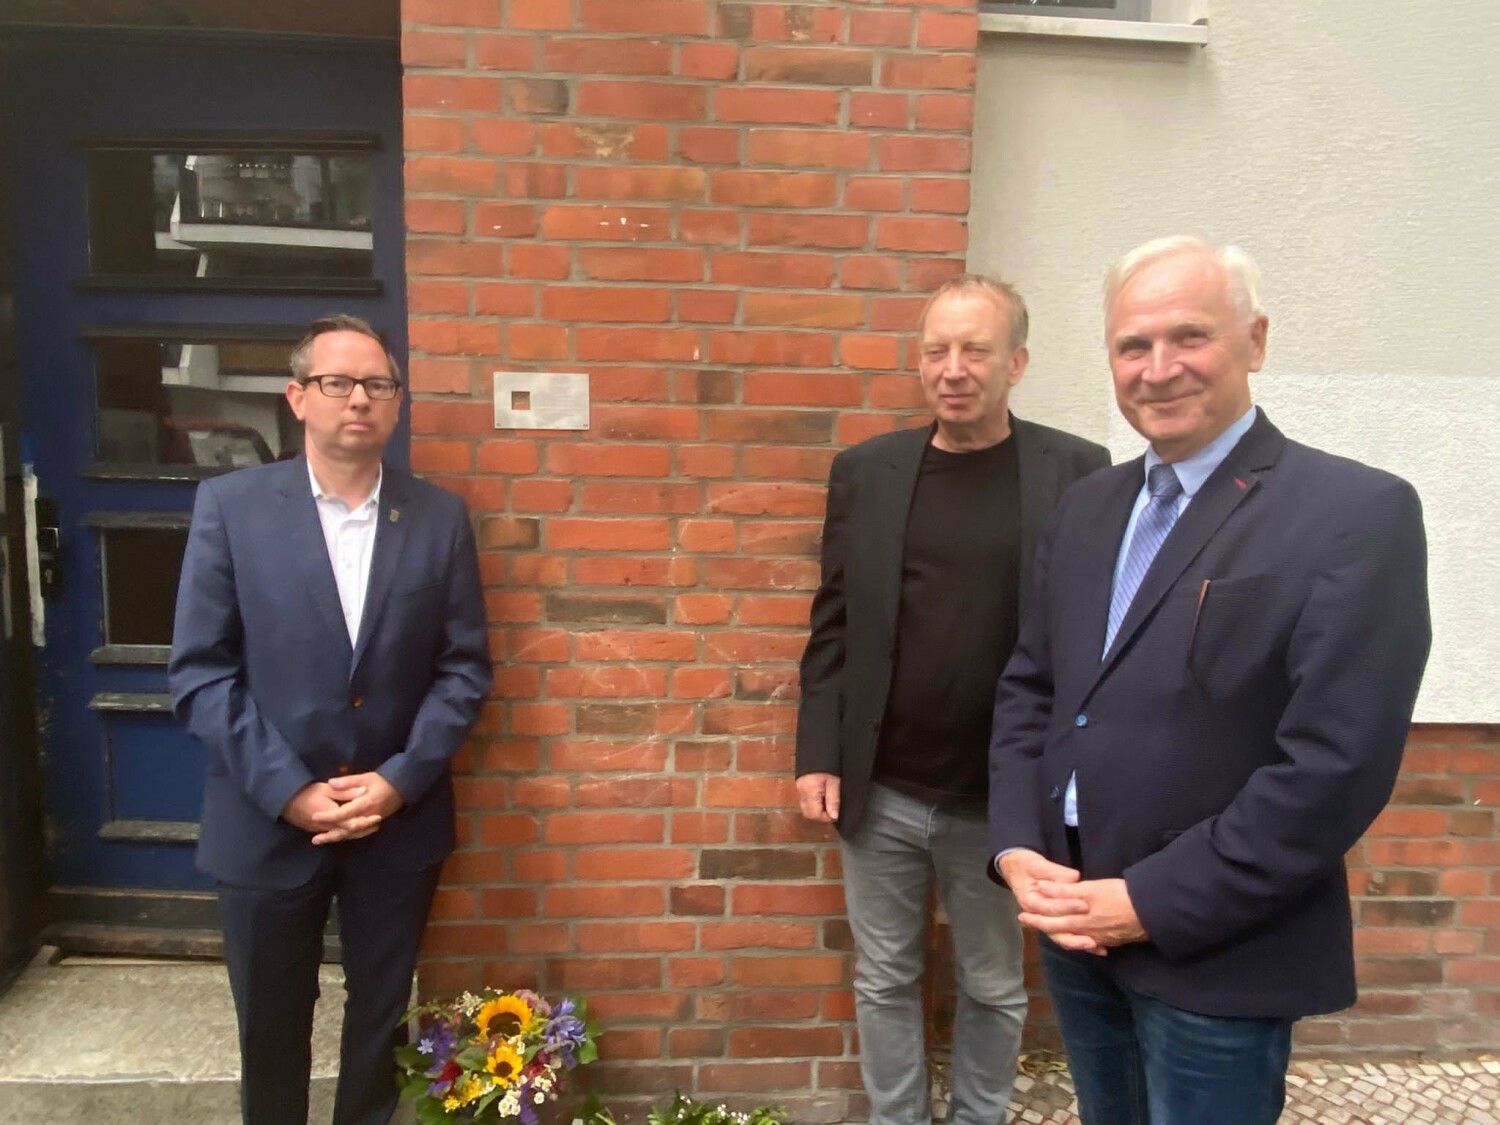 Treptow-Köpenicks Bezirksbürgermeister Oliver Igel, BAB Tom Sello und UOKG-Bundesvorsitzender Dieter Dombrowski